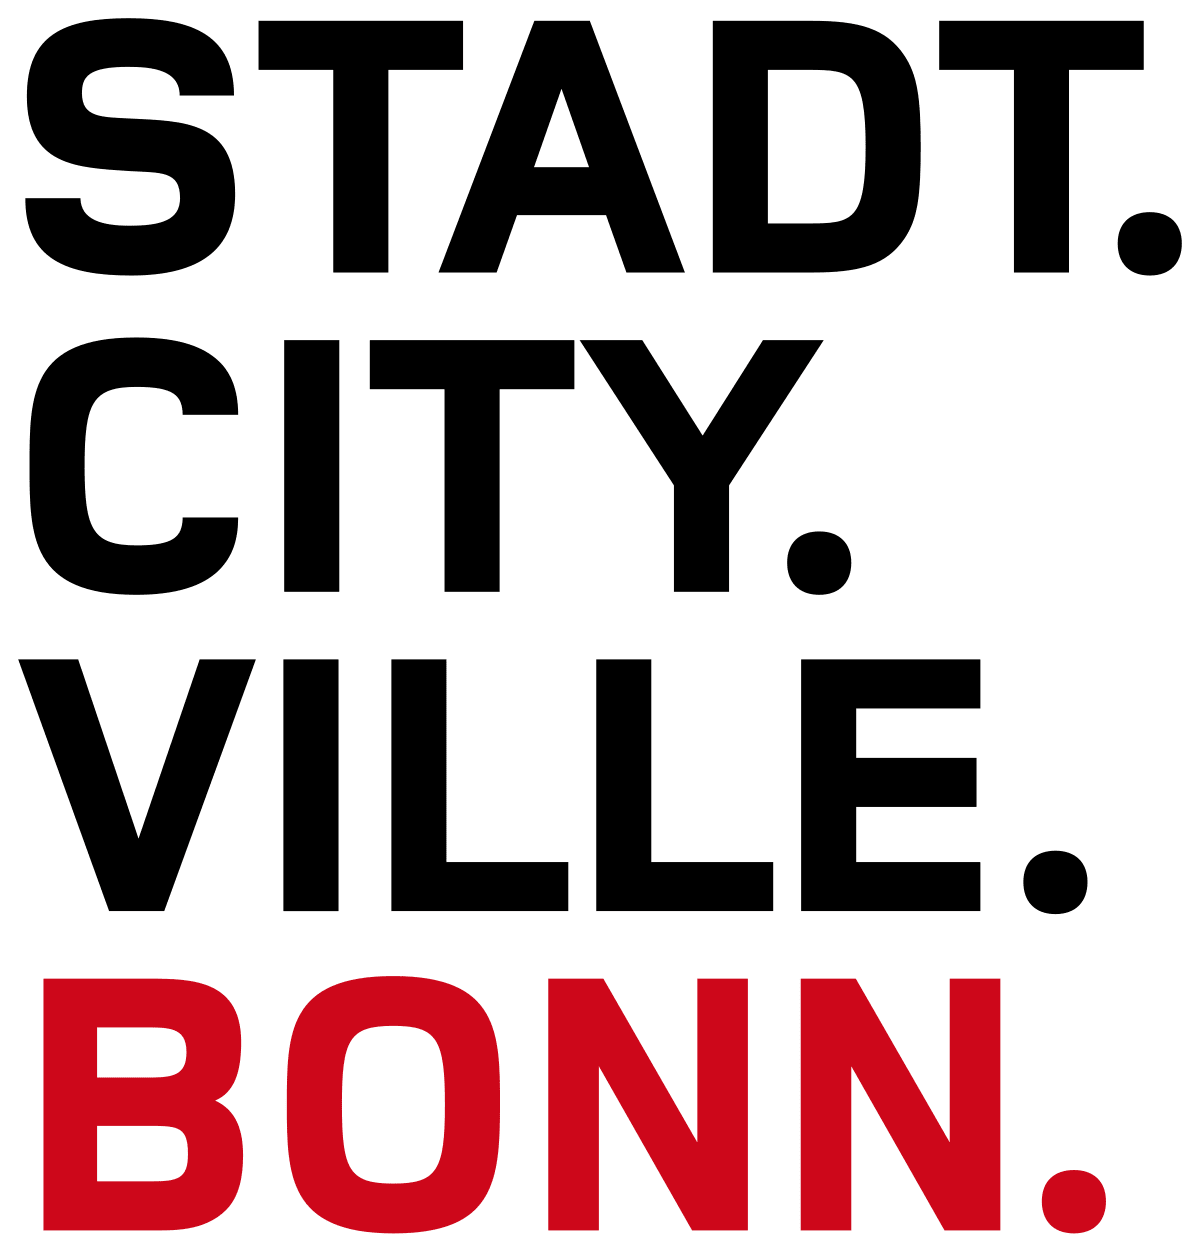 Bundesstadt Bonn logo